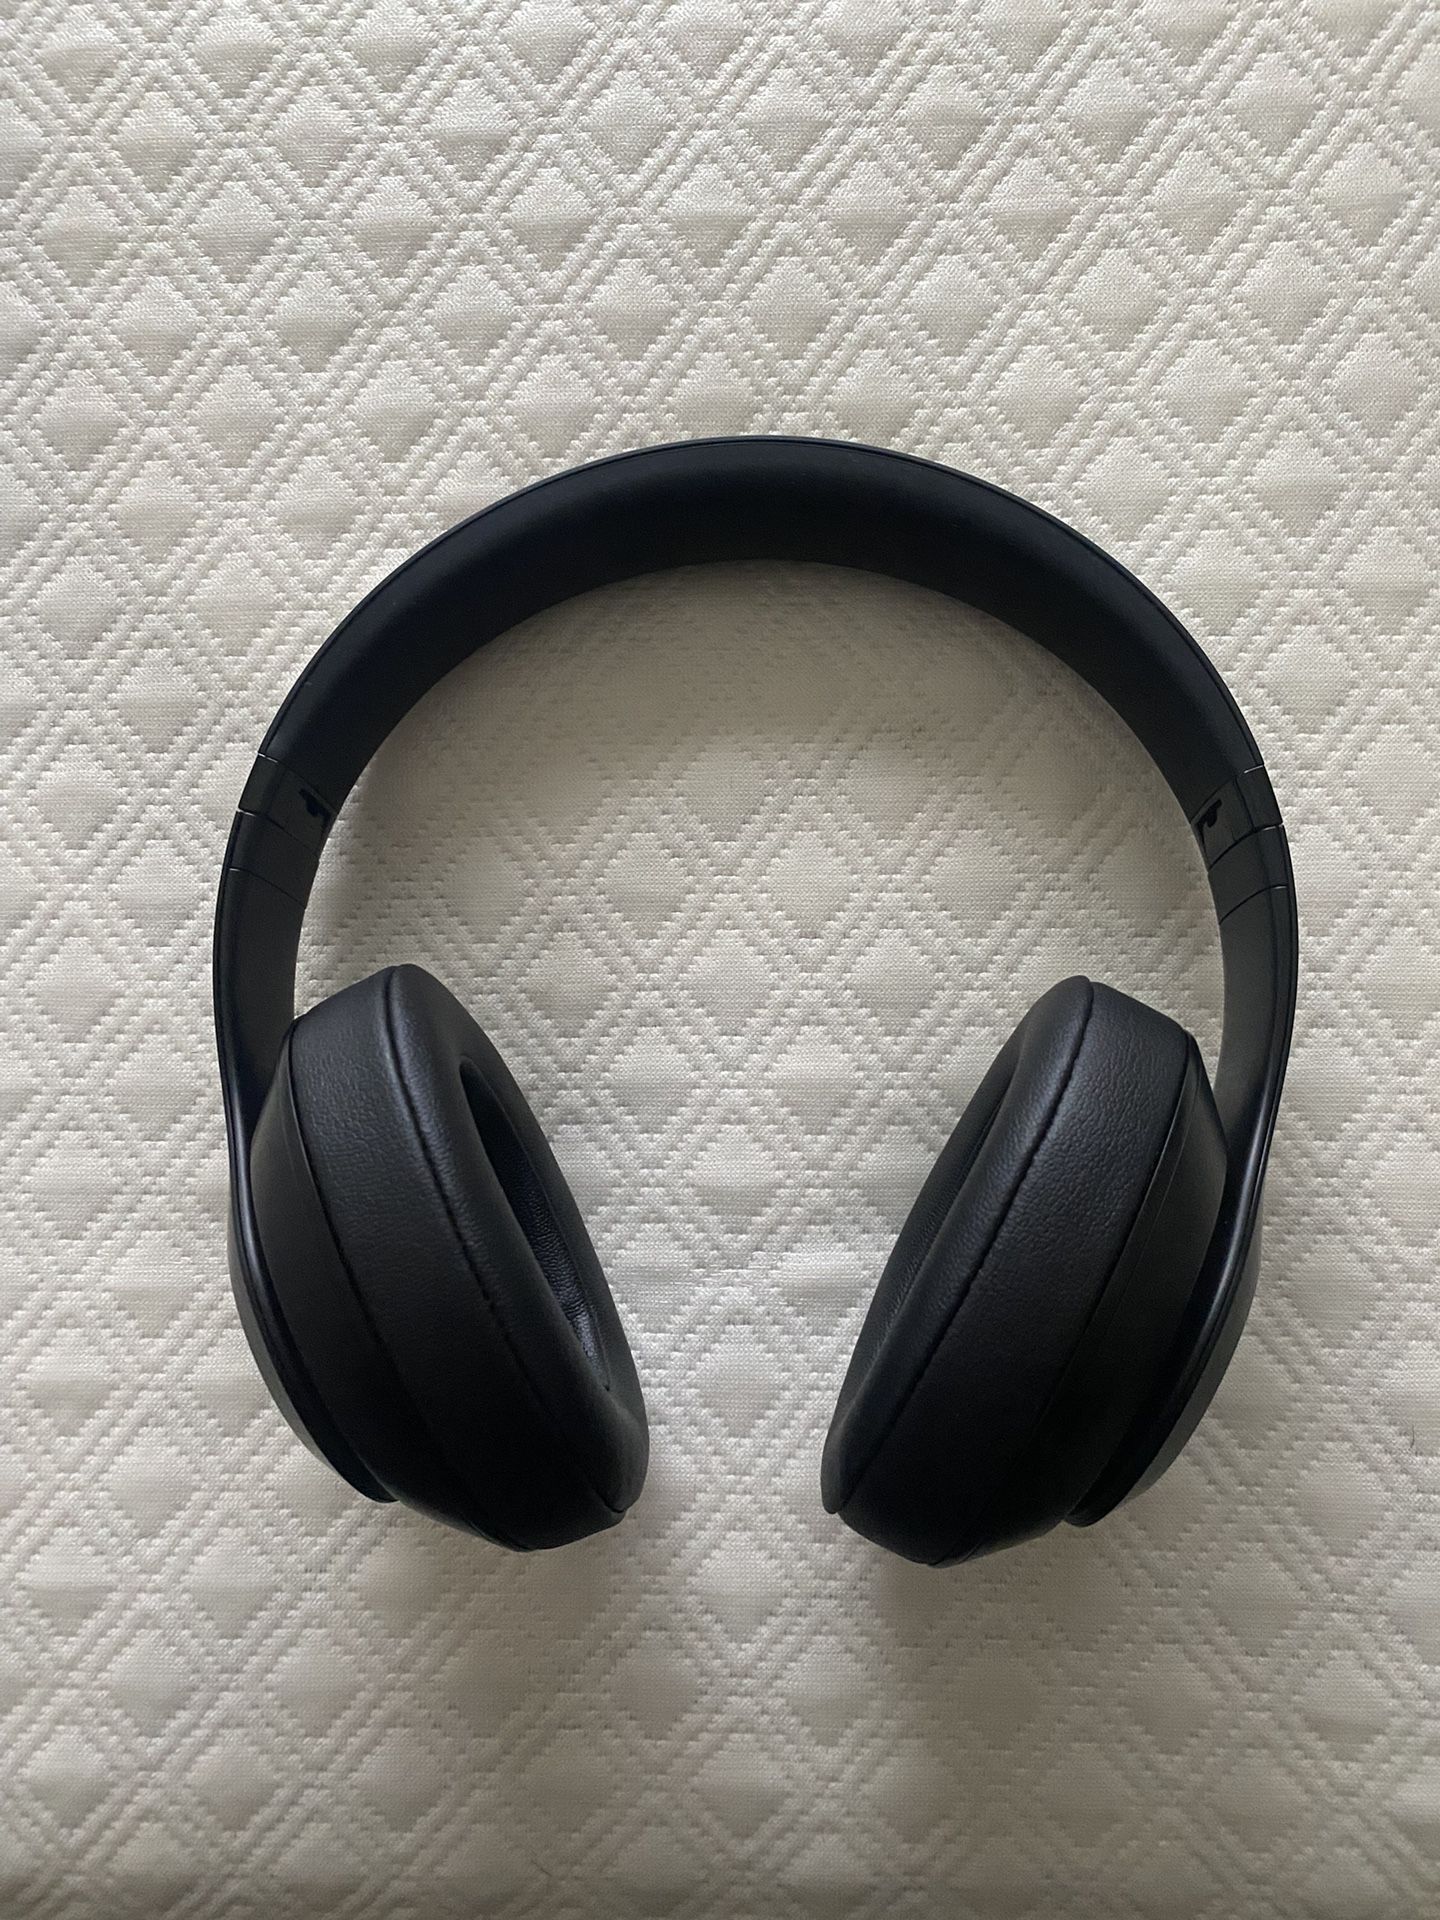 Beats Studio Pro Bluetooth Wireless Headphones